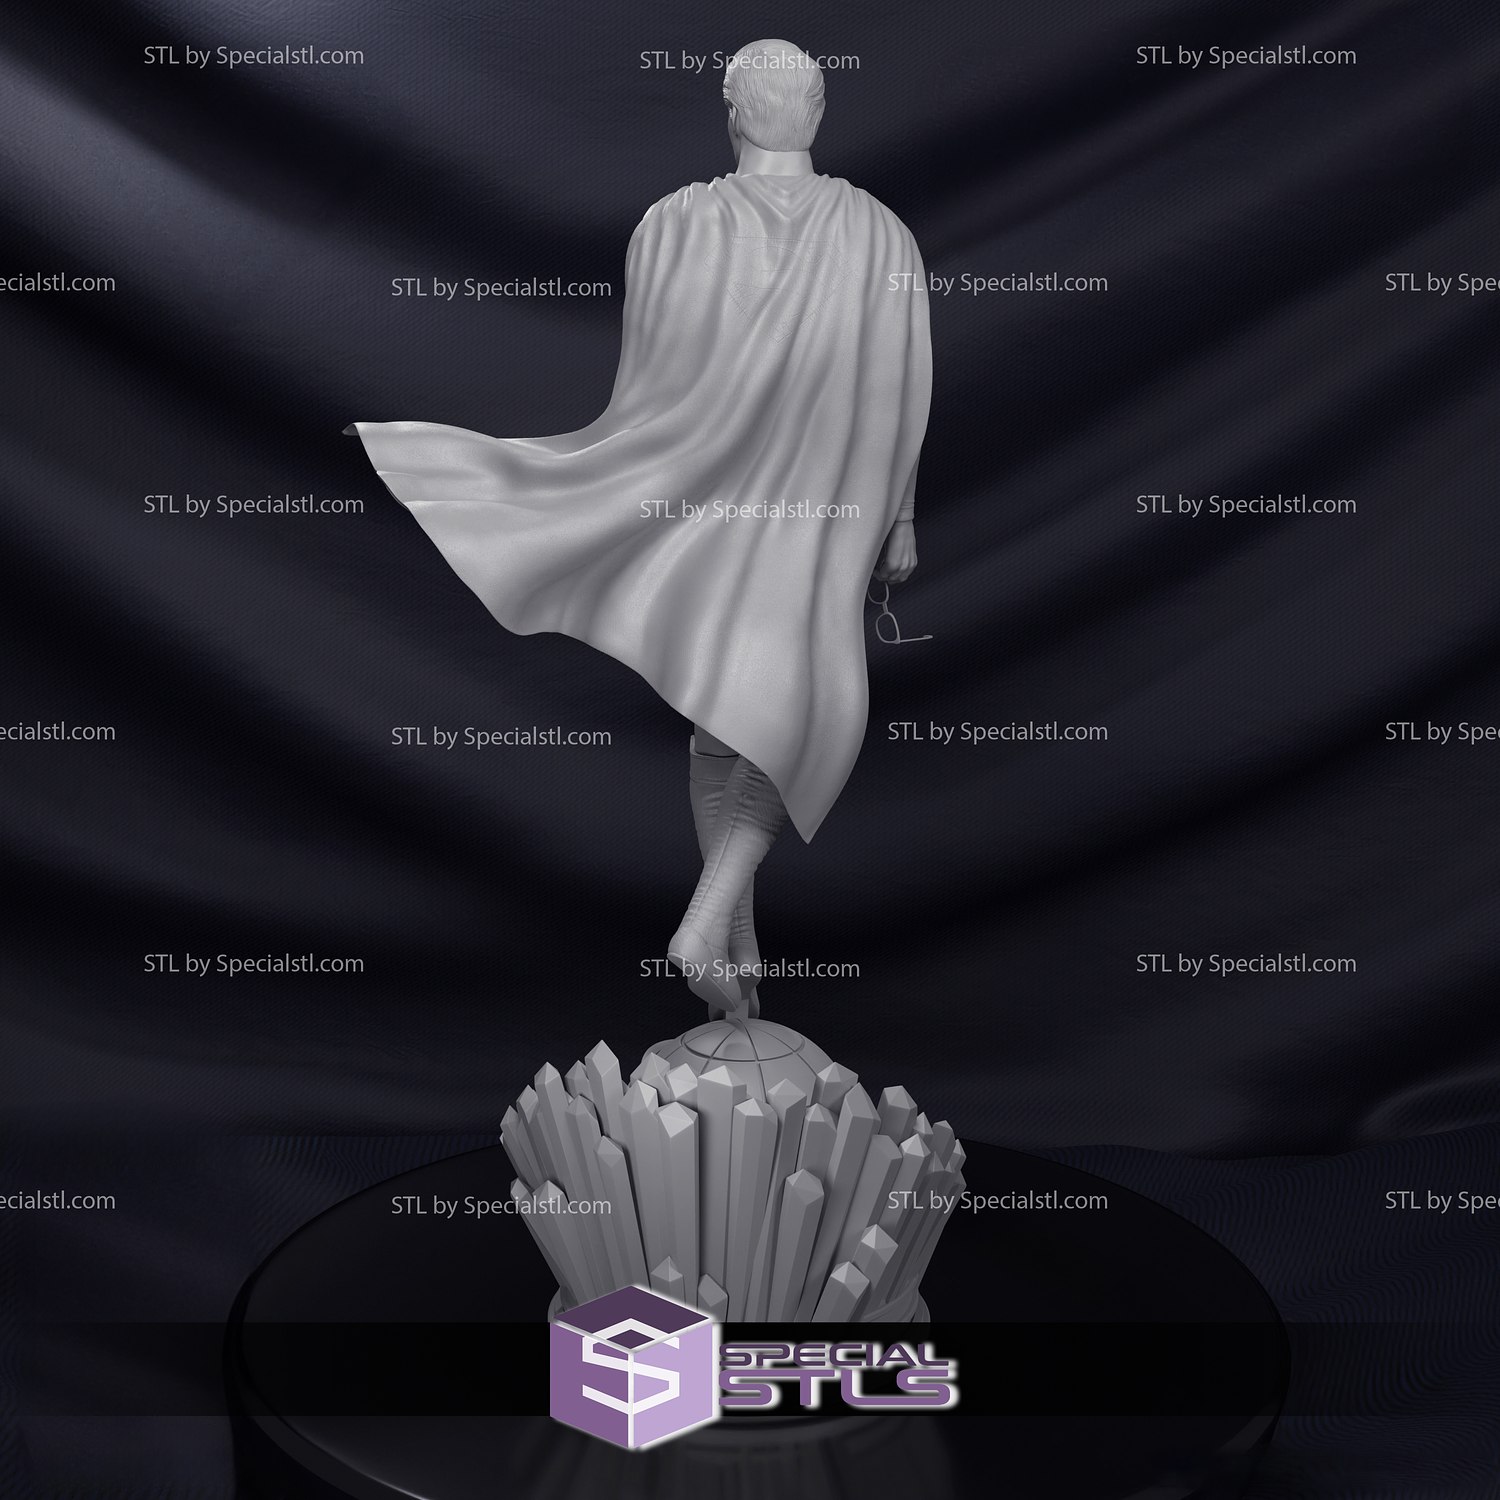 Superman Christopher Reeve V3 3D Printing Figurine STL Files